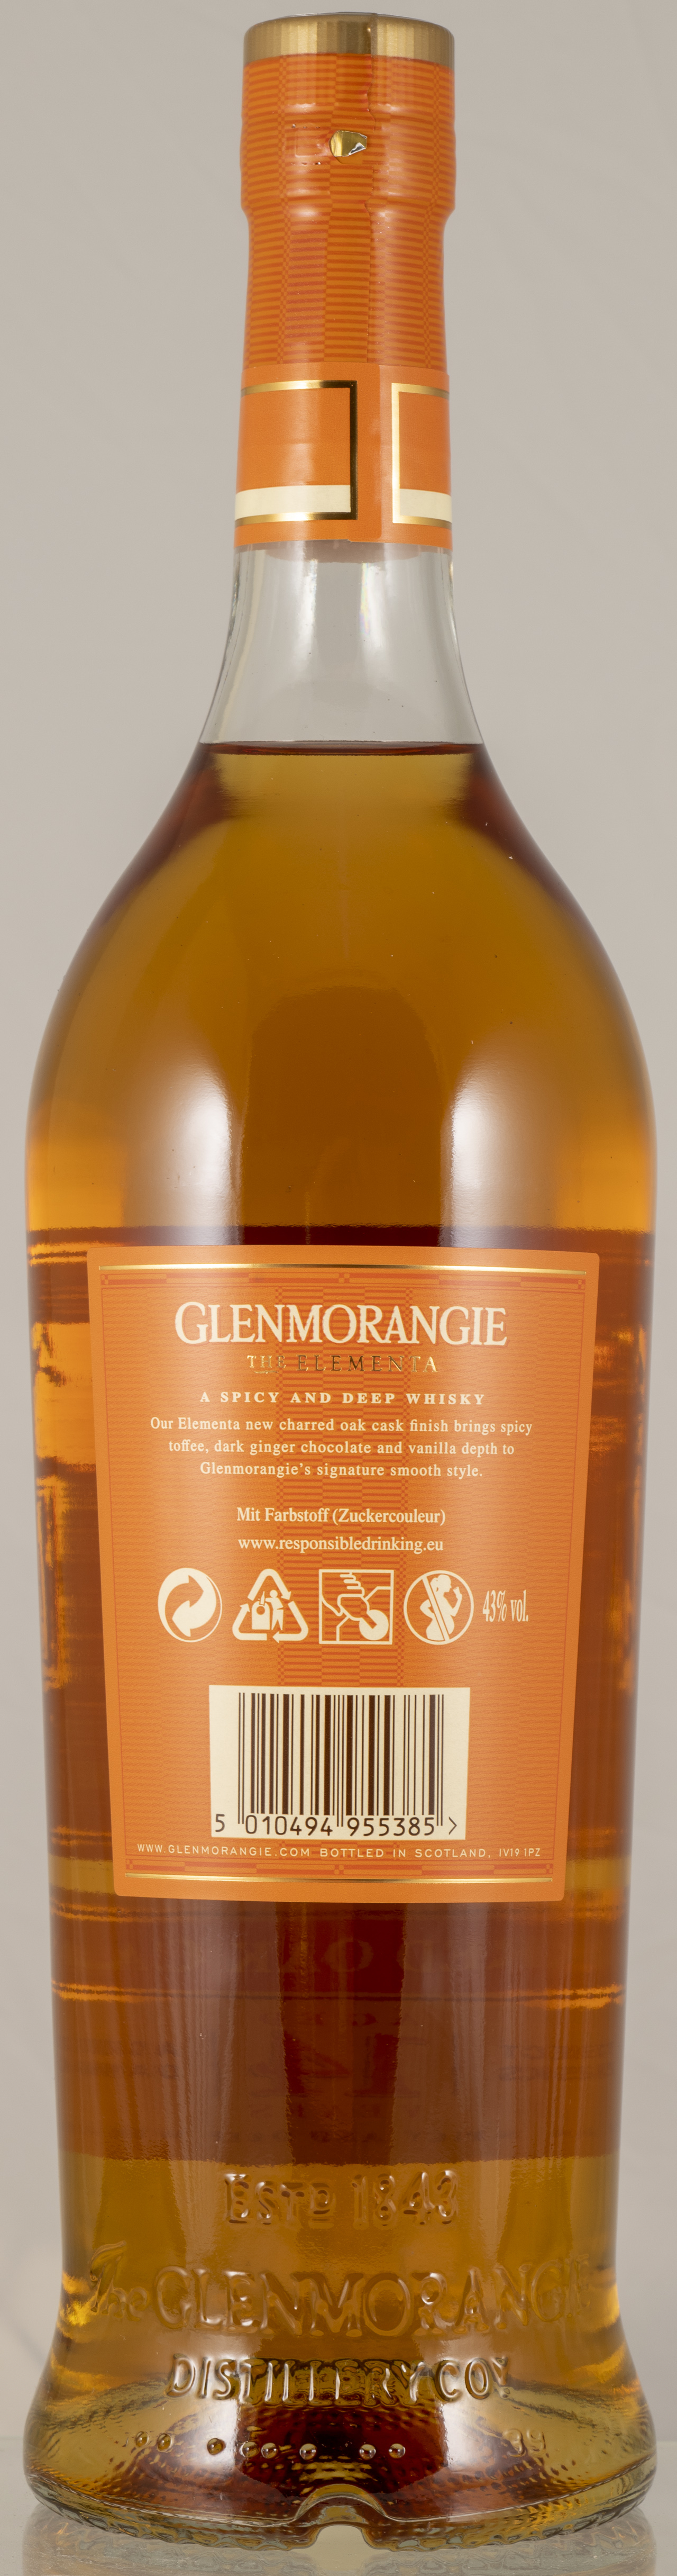 Billede: PHC_7075 - Glenmorangie The Elementa 14 - bottle back.jpg